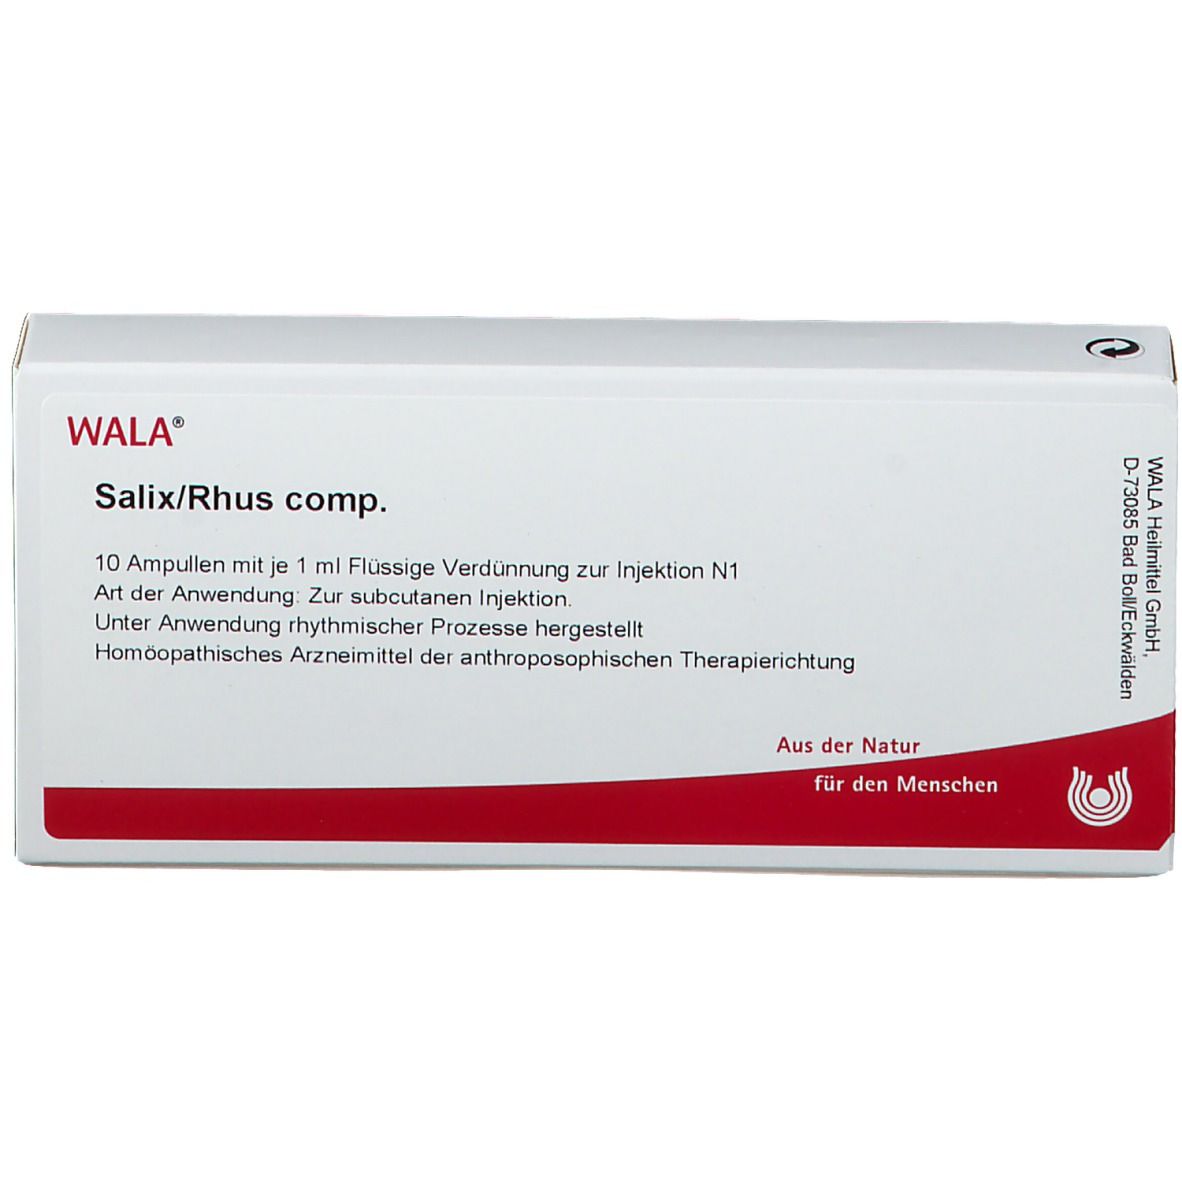 WALA® Salix/Rhus comp.